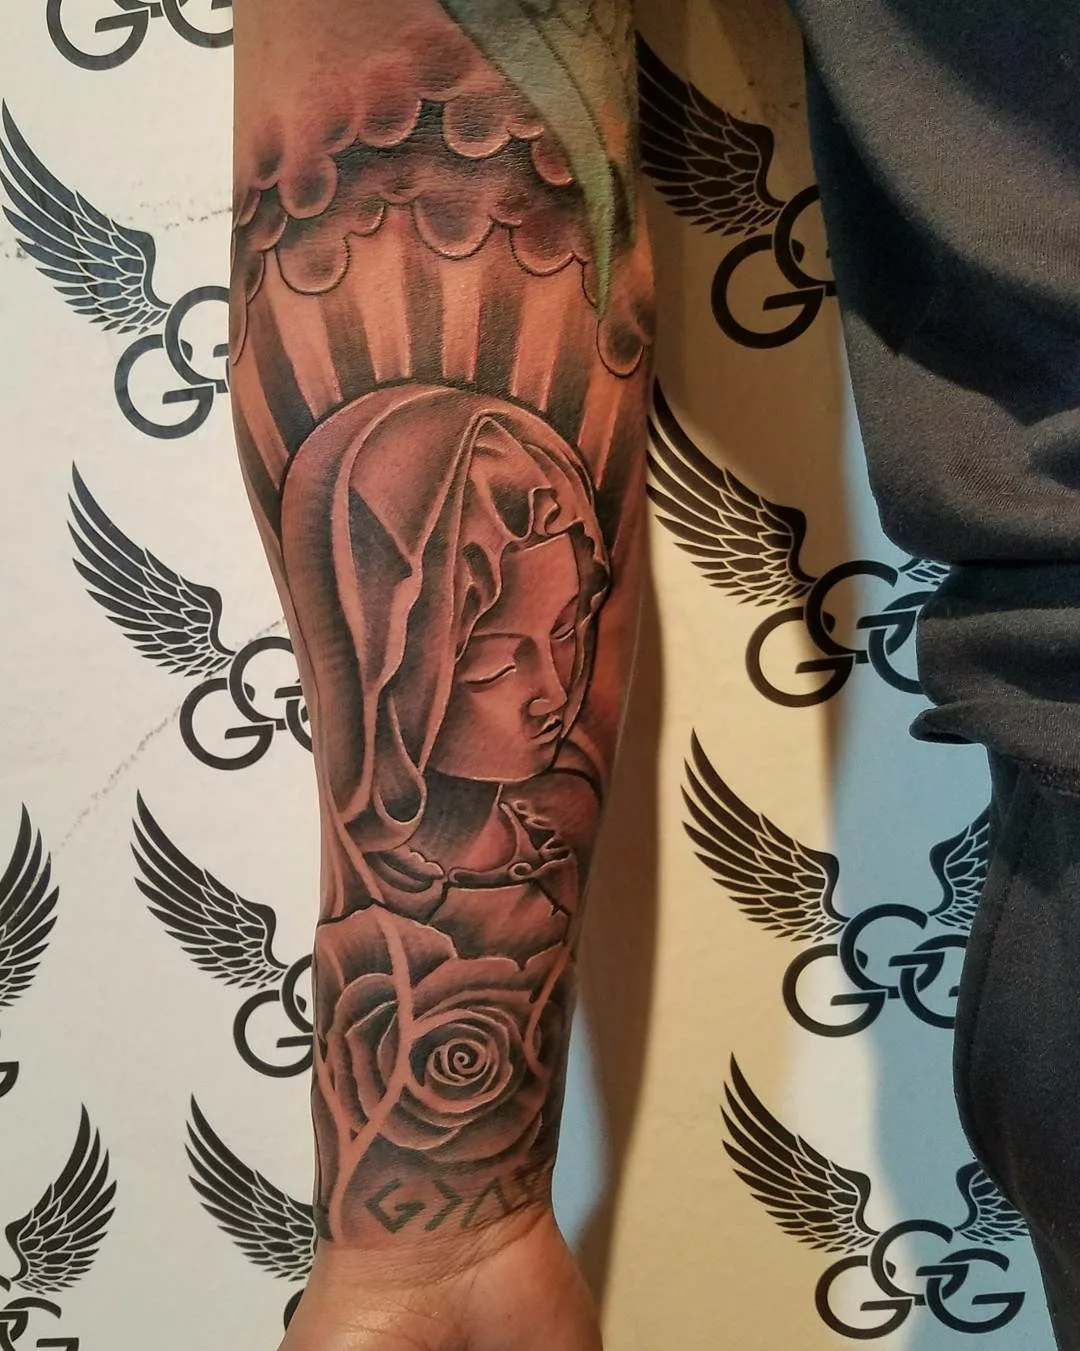 virgin mary tattoo on forearm